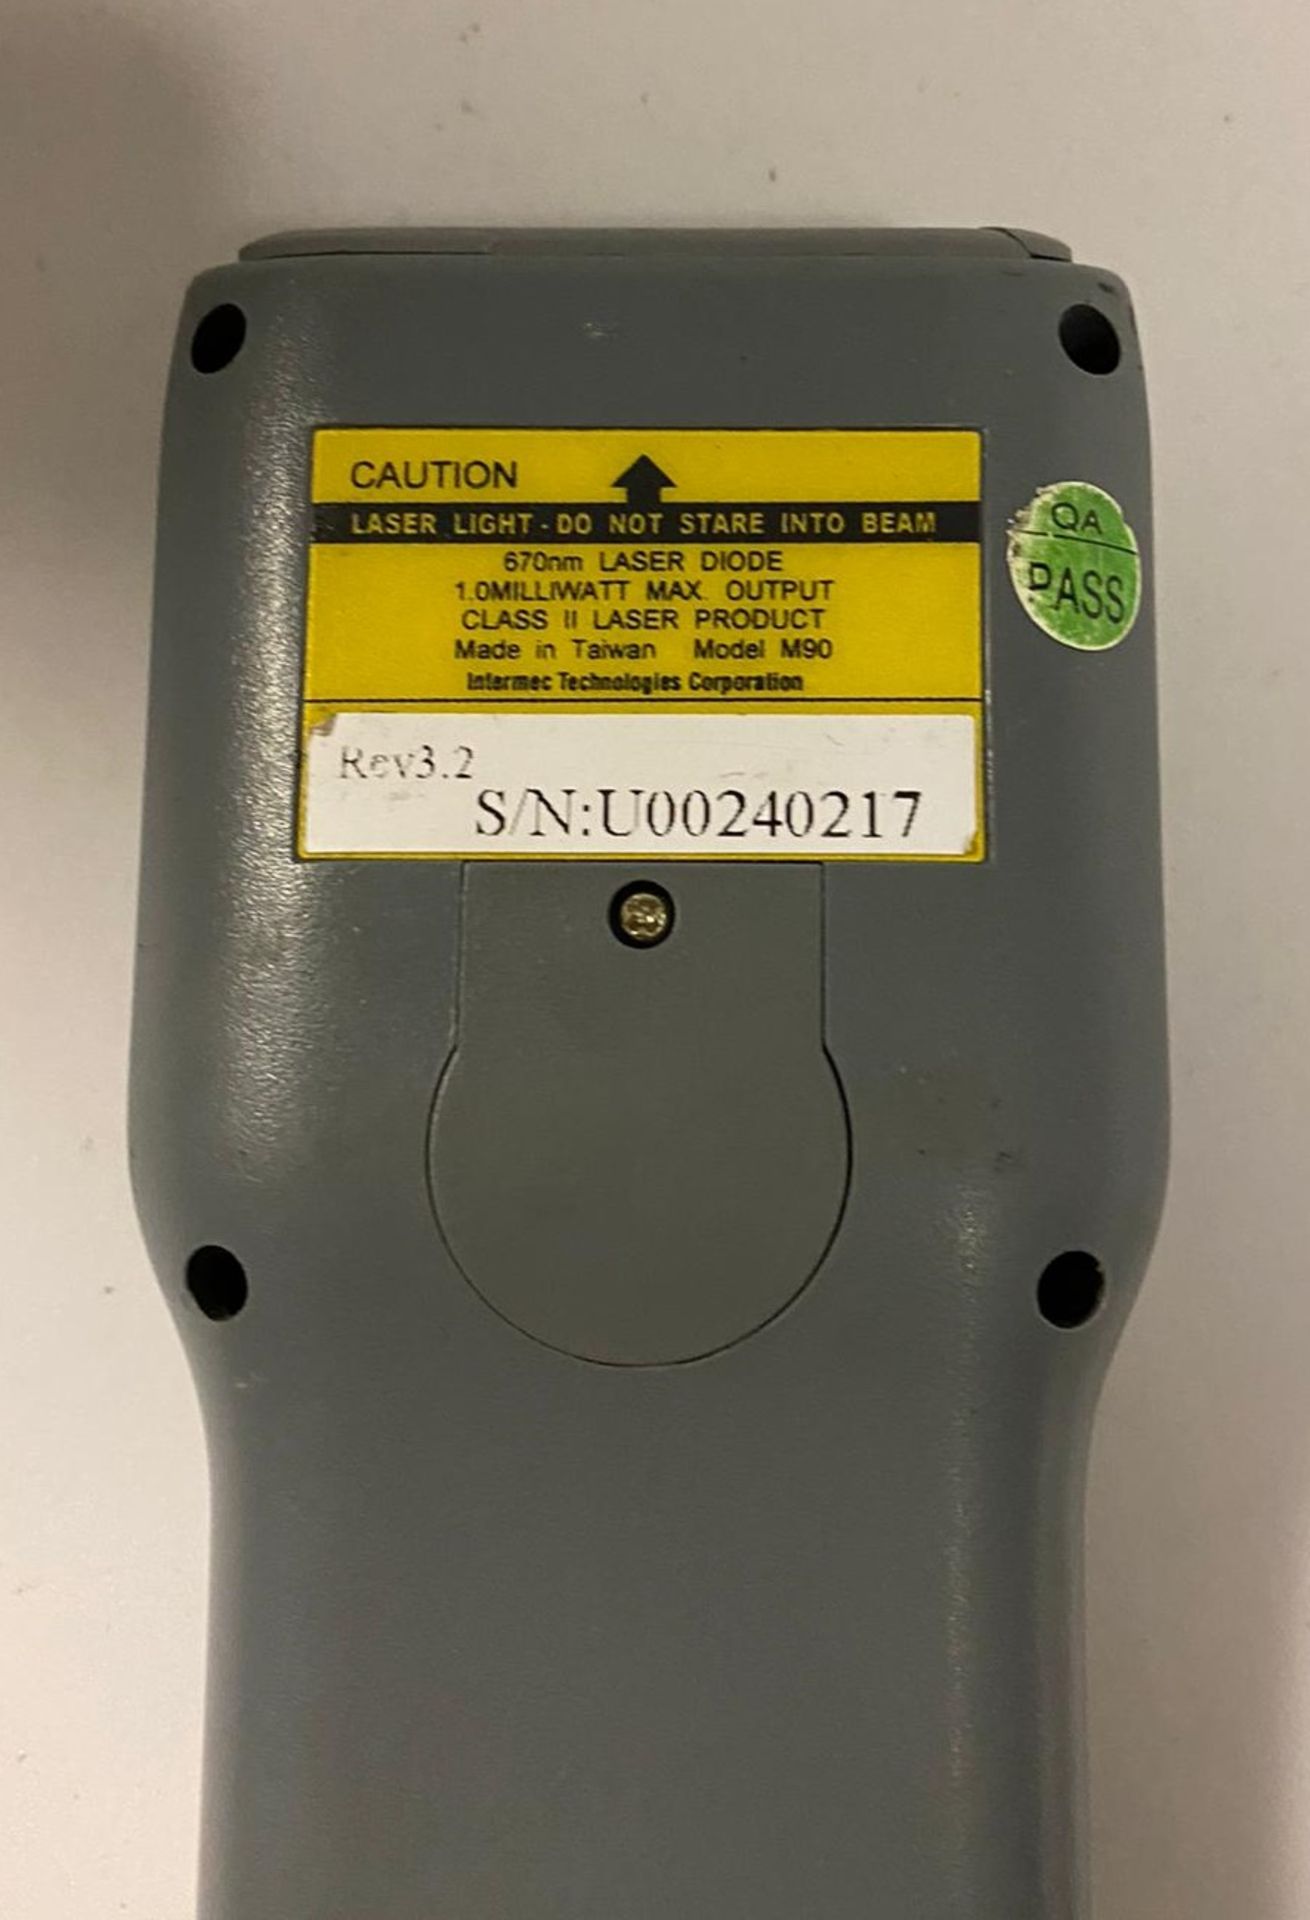 2 x Intermec M90 Portable Barcode Scanner - Used Condition - Location: Altrincham WA14 - - Image 5 of 8